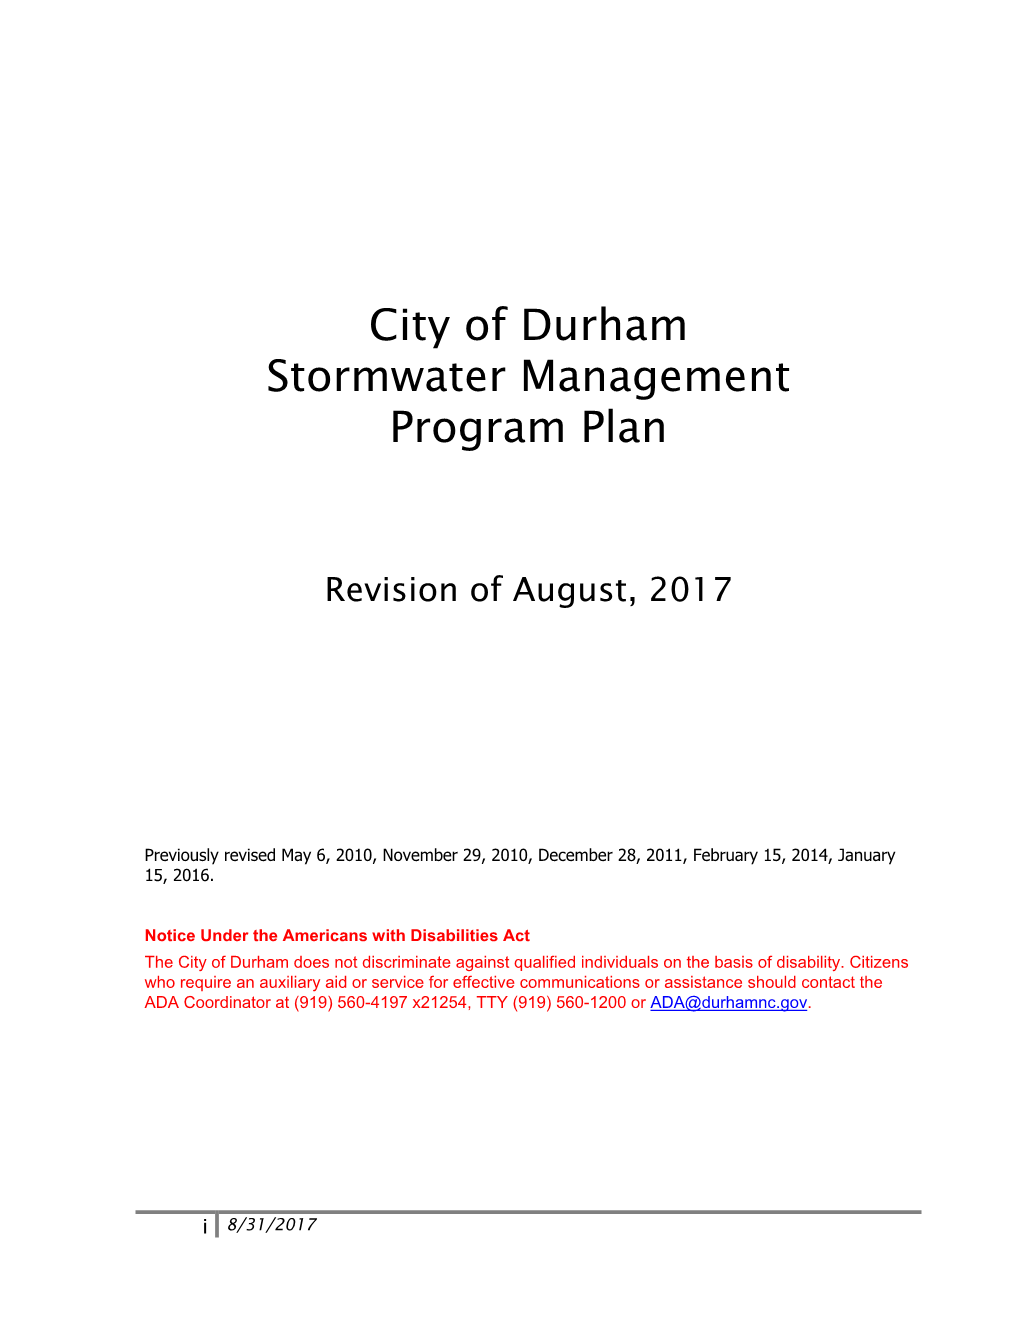 City of Durham Stormwater Management Program Plan